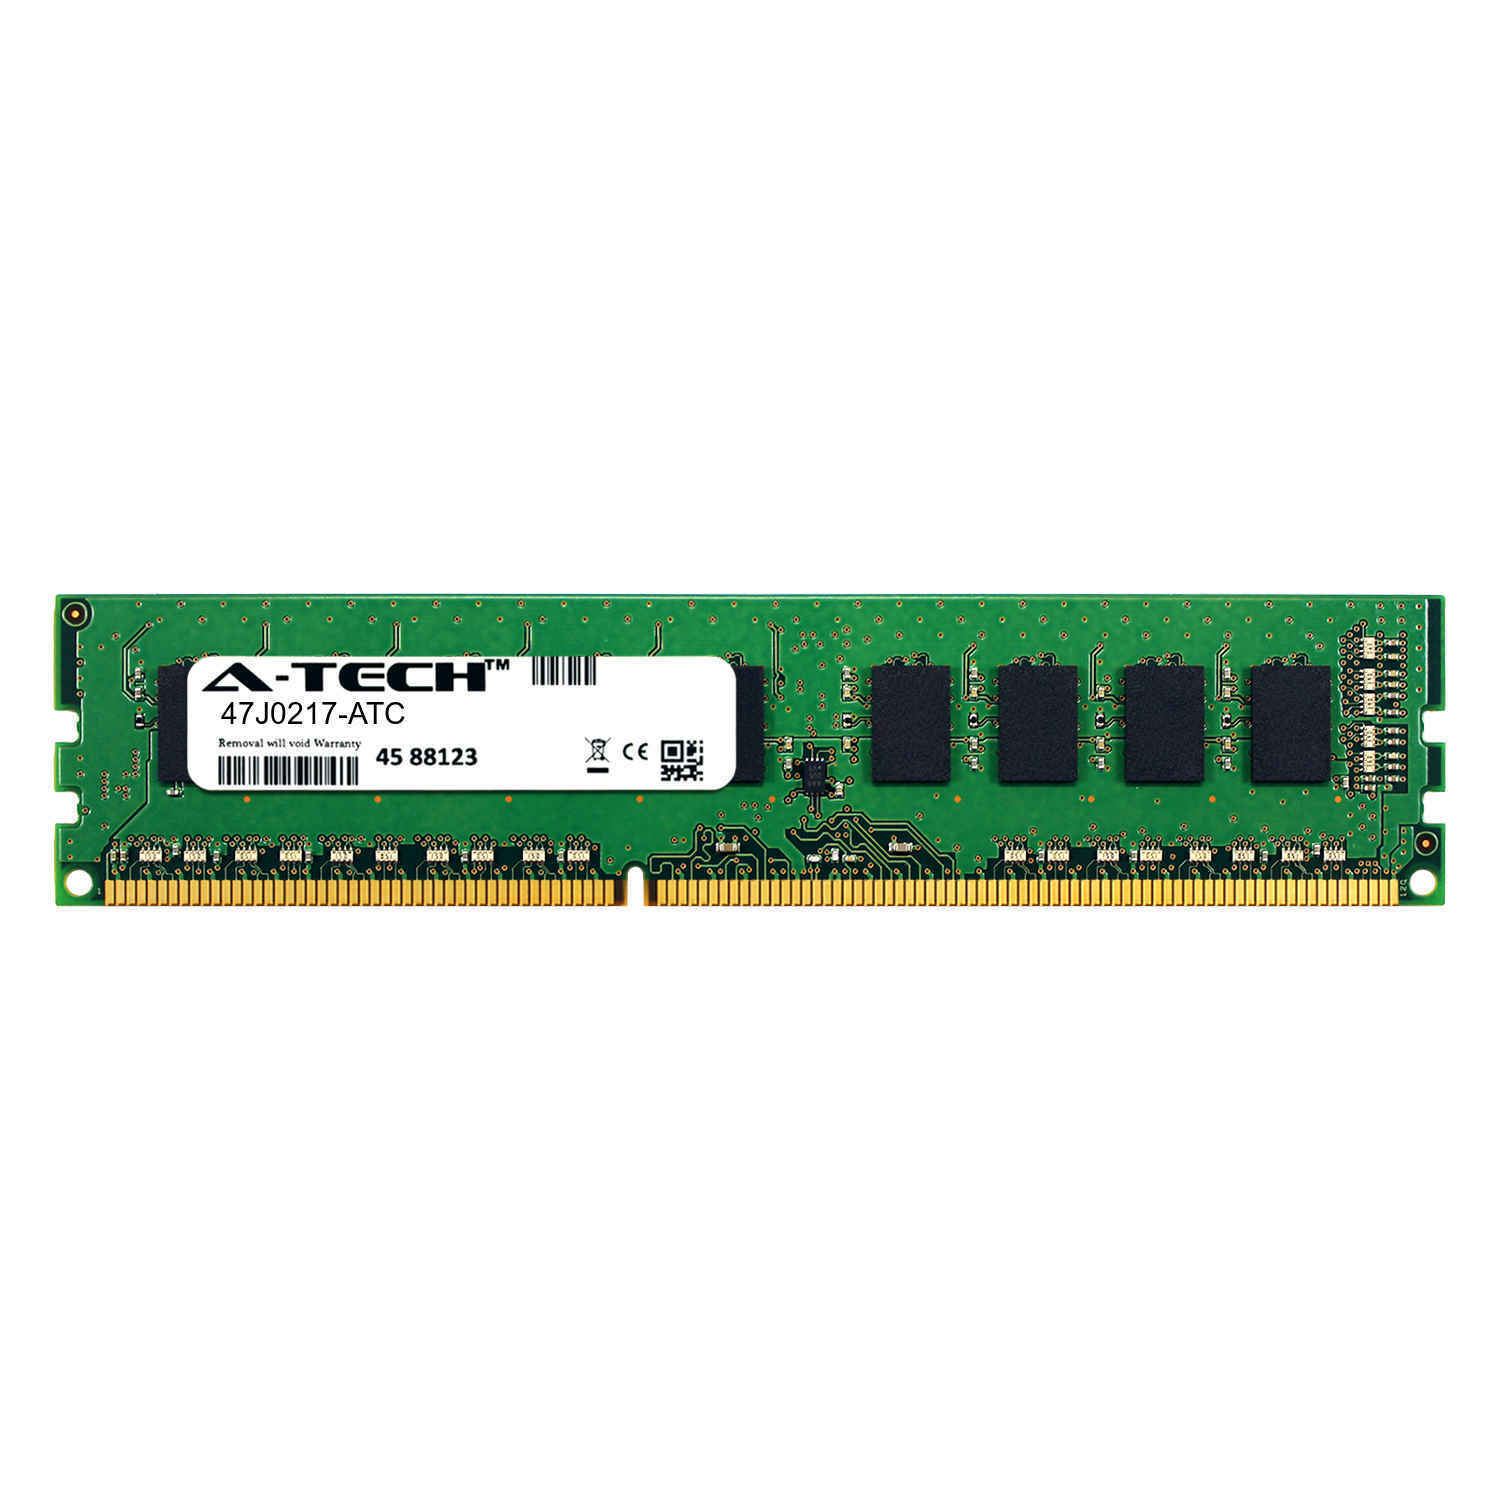 8GB DDR3 PC3-12800E 1600MHz ECC UDIMM (IBM 47J0217 Equivalent) Server Memory RAM